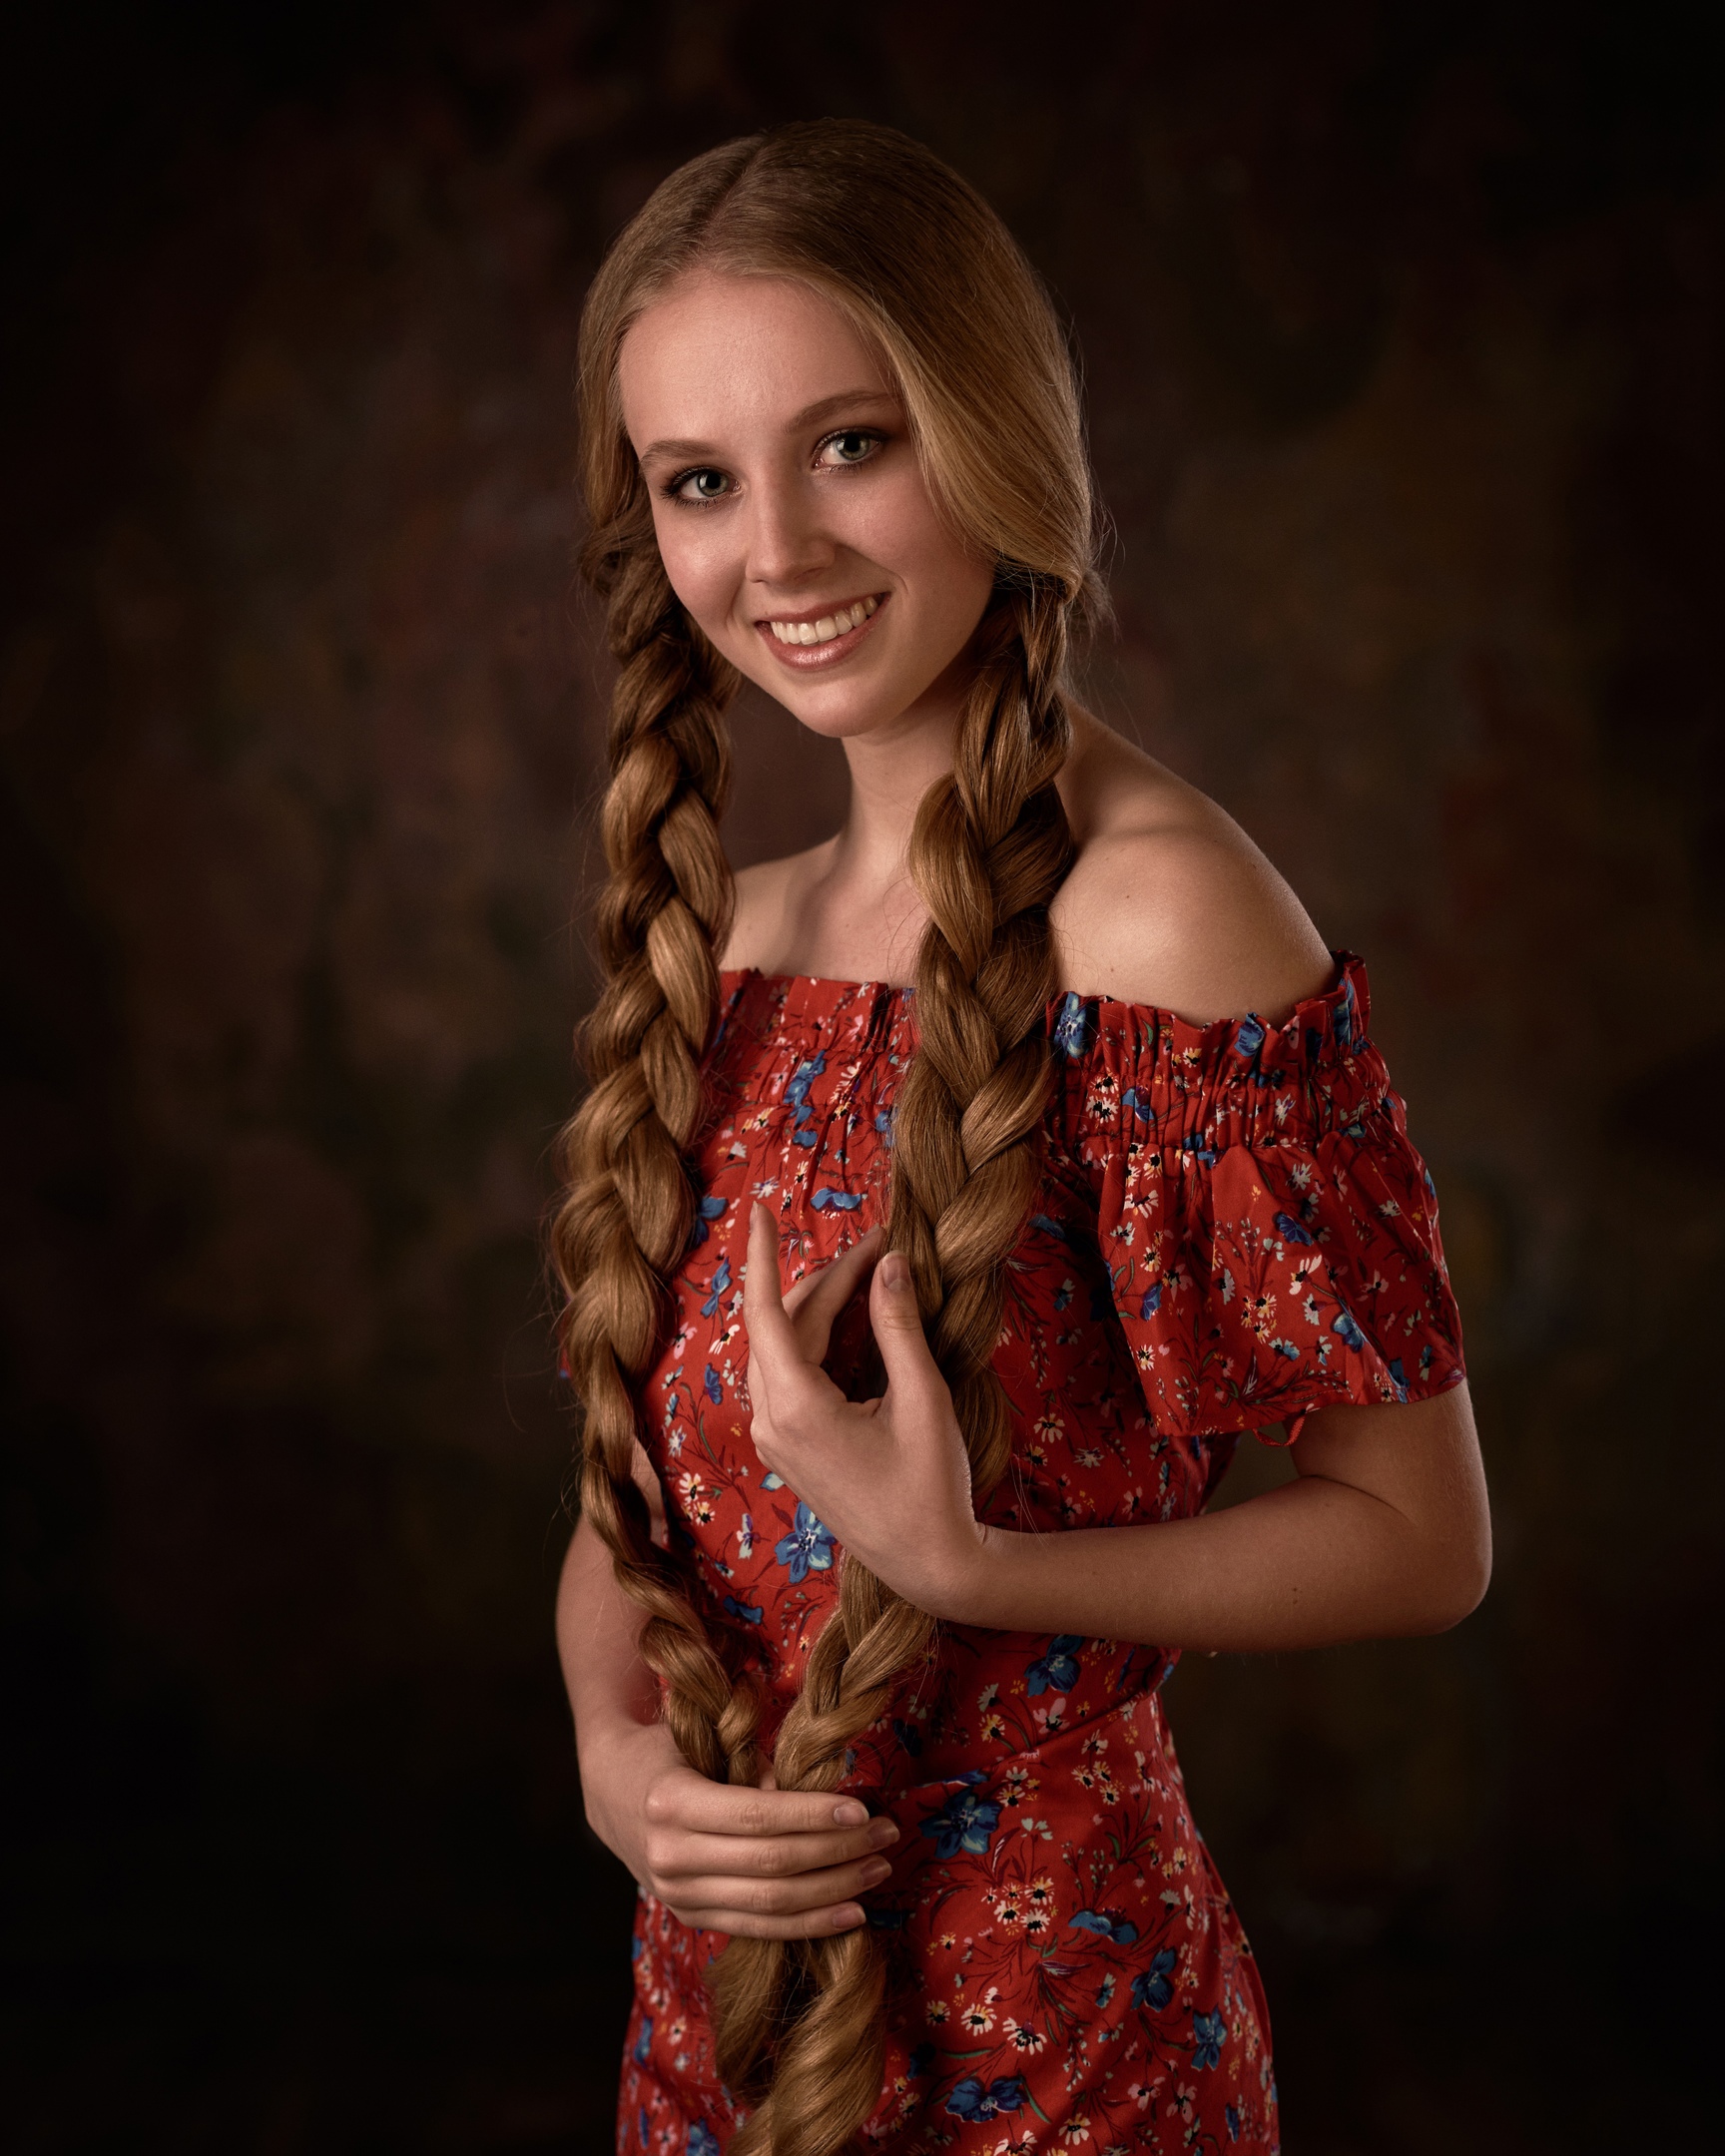 Max Pyzhik Women Polina Panova Blonde Twintails Braids Dress Smiling Simple Background 1728x2160